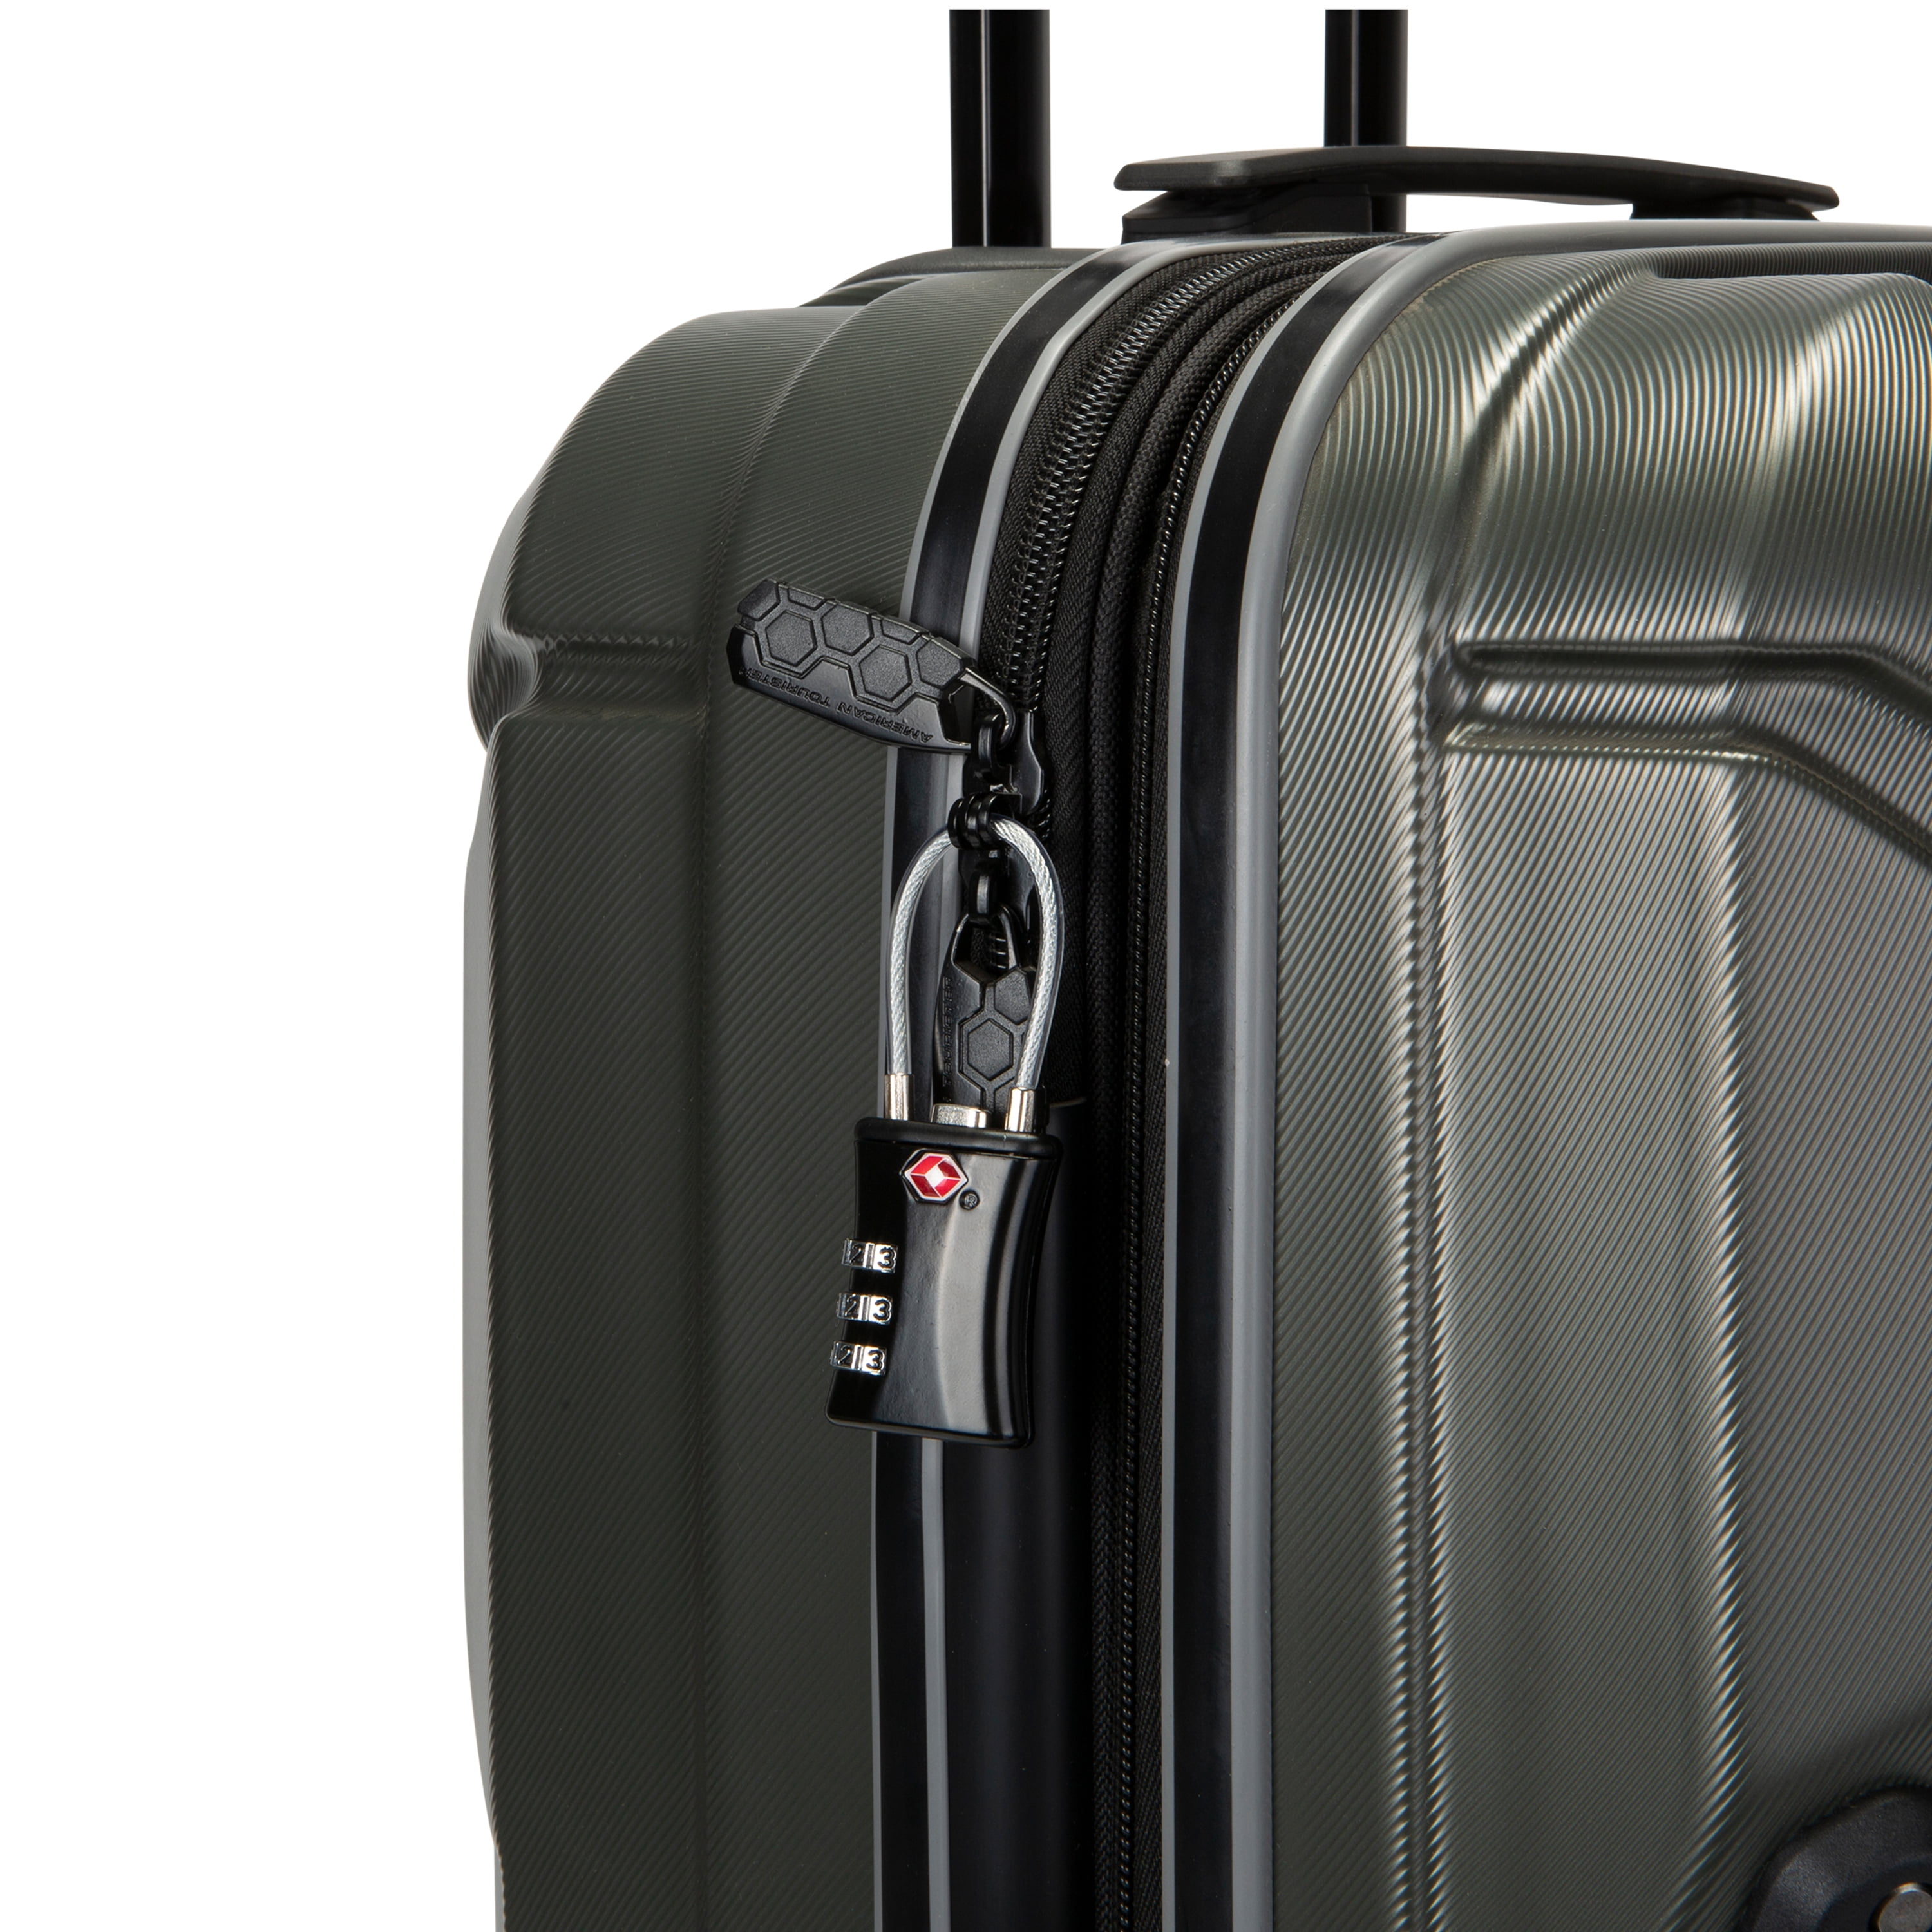 Protege 2 Pack Travel Suitcase Zinc Alloy Luggage Locks with Keys, Blue  Atoll